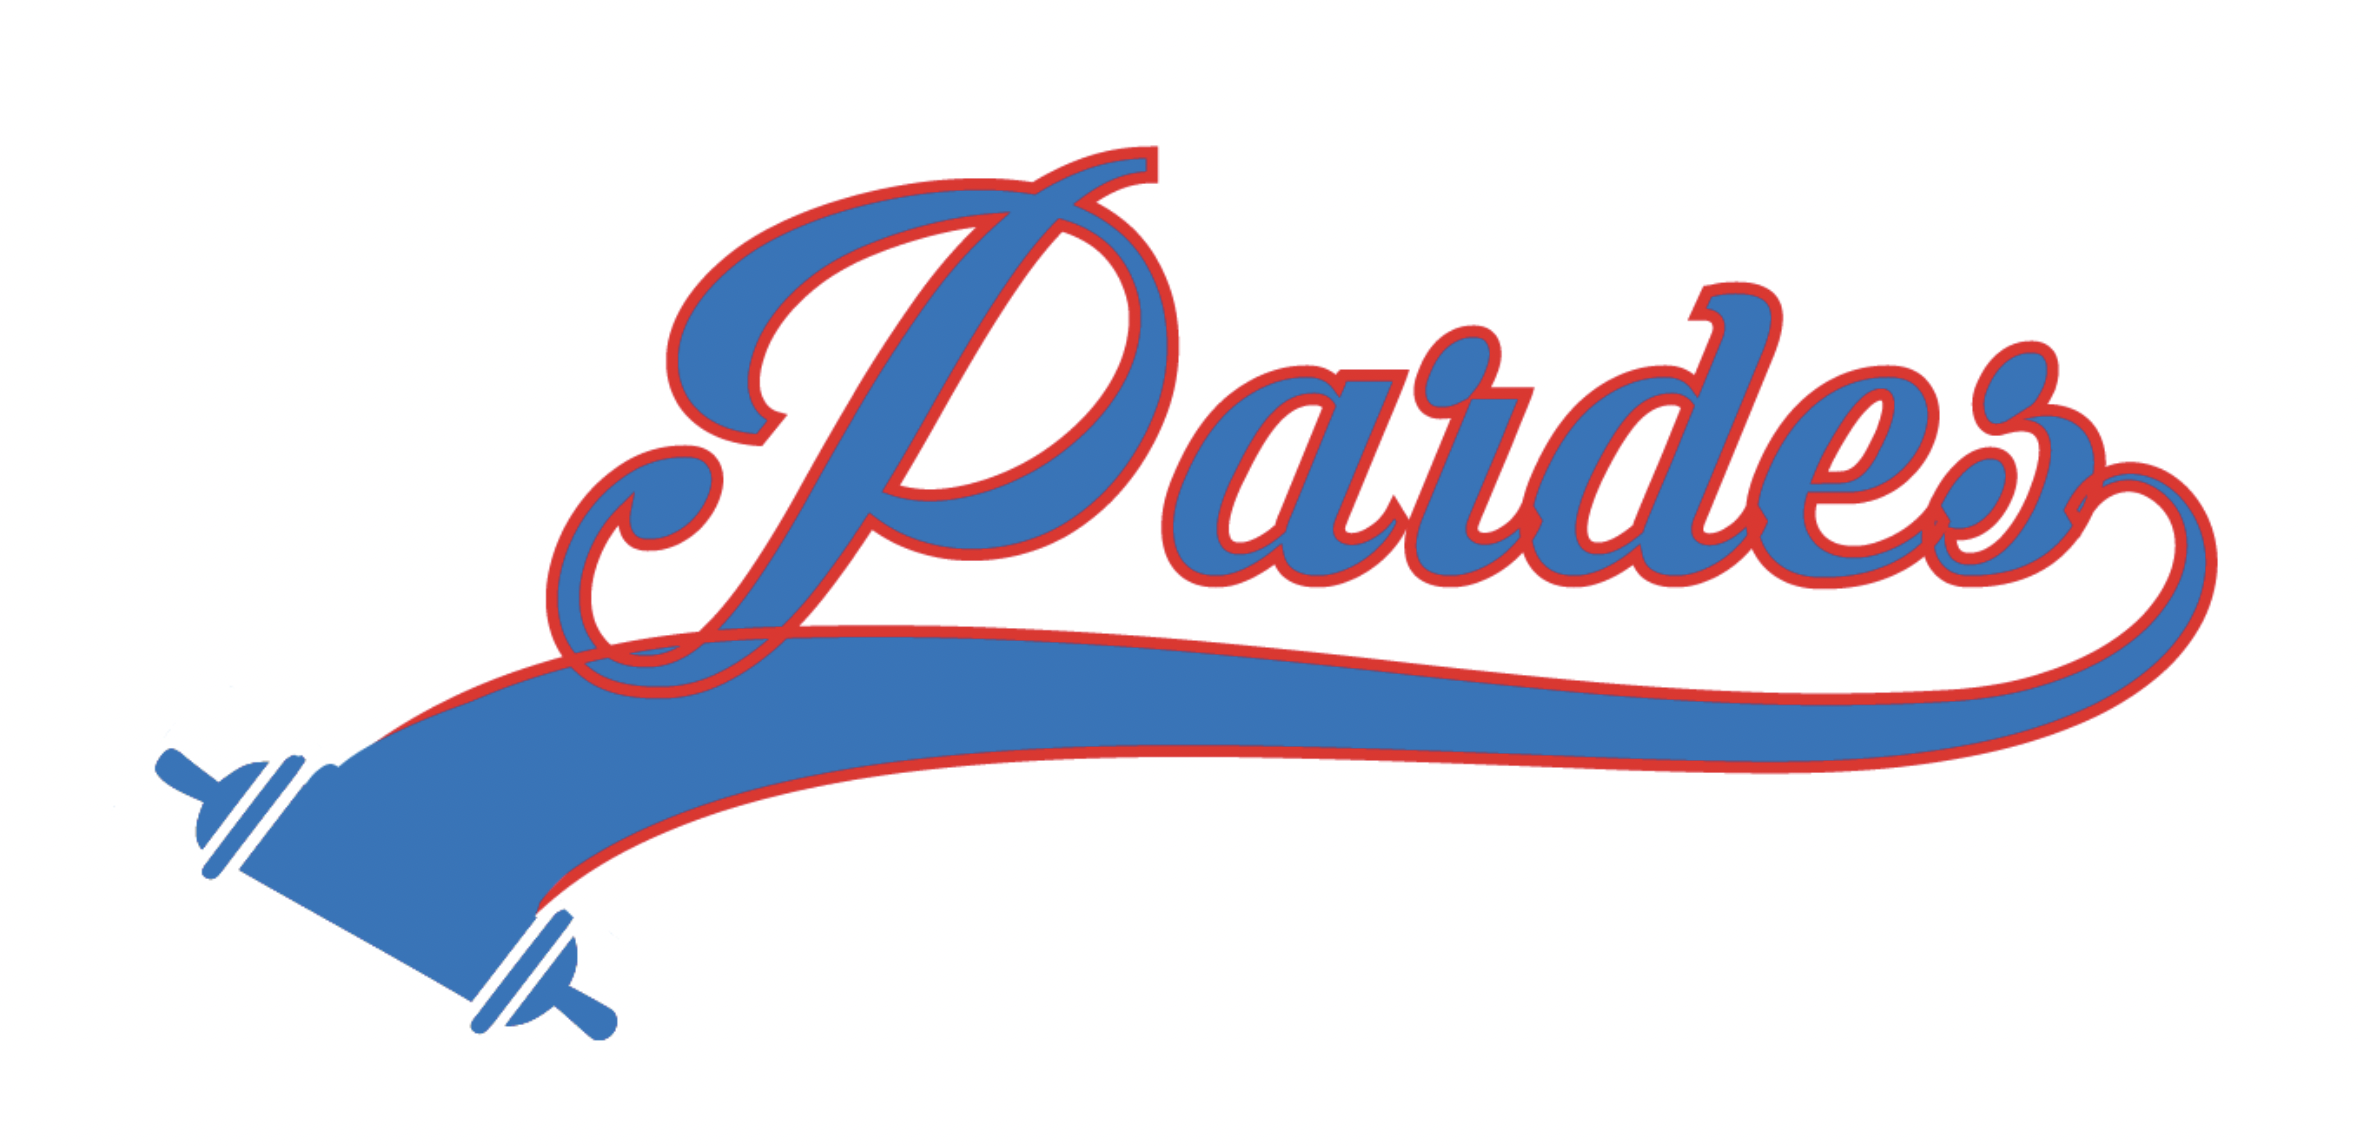 Camp Pardes LLC logo